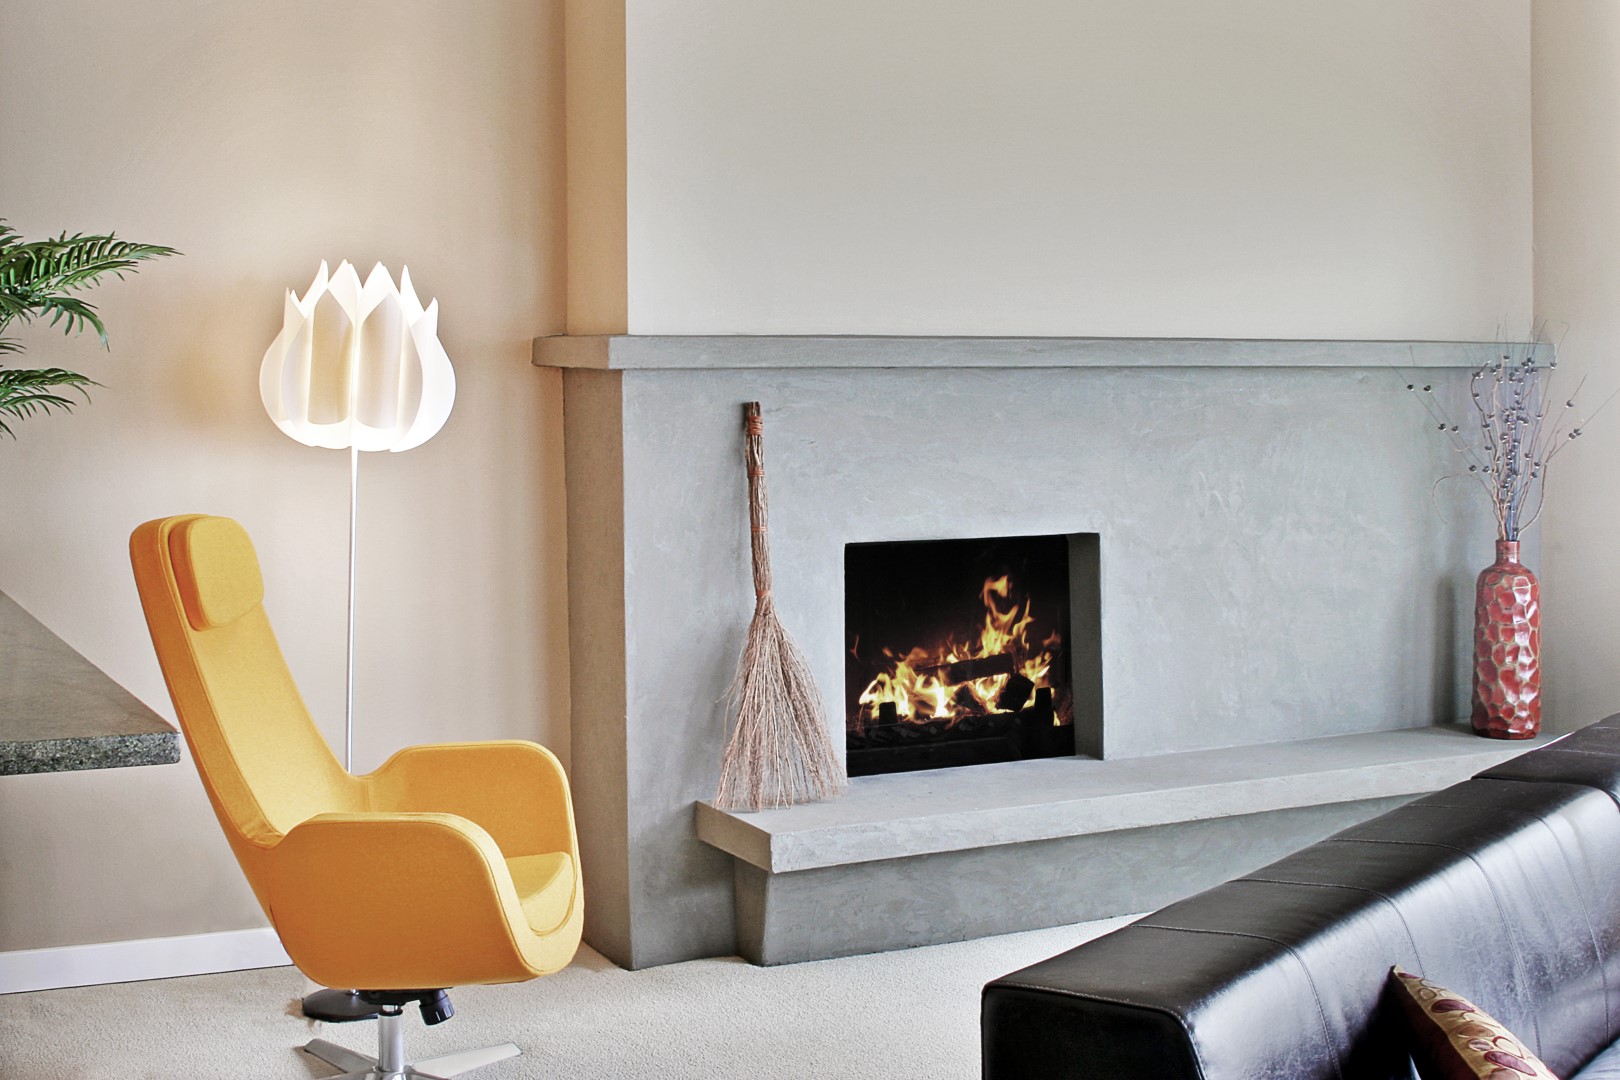 Fireplace In Modern Livingroom 2022 03 04 02 32 19 Utc